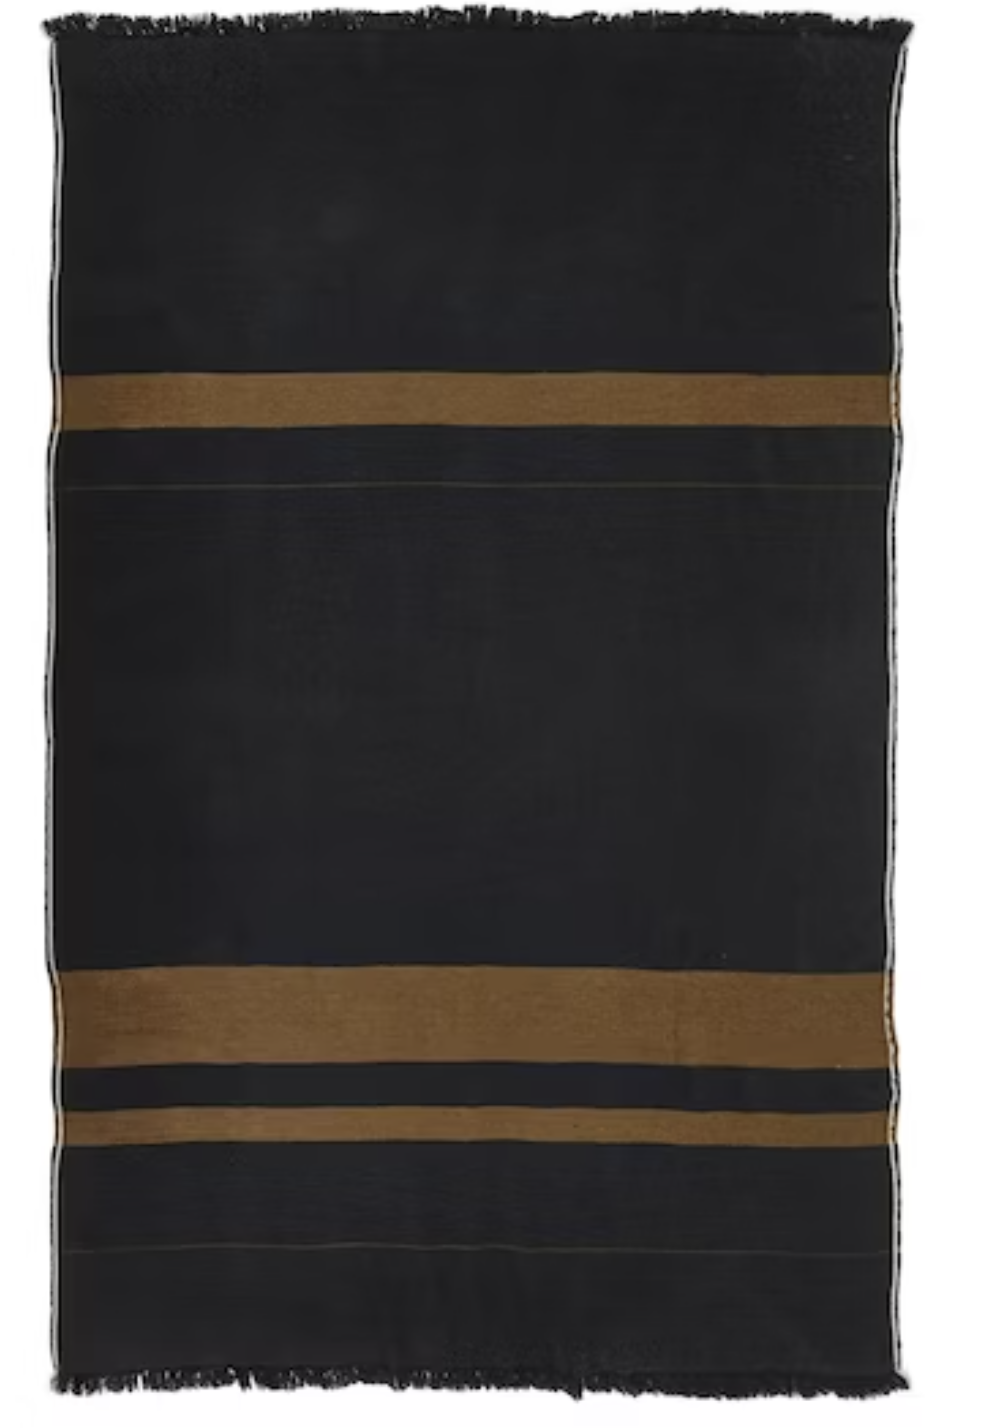 OSCAR THROW - Black Stripe $490.00